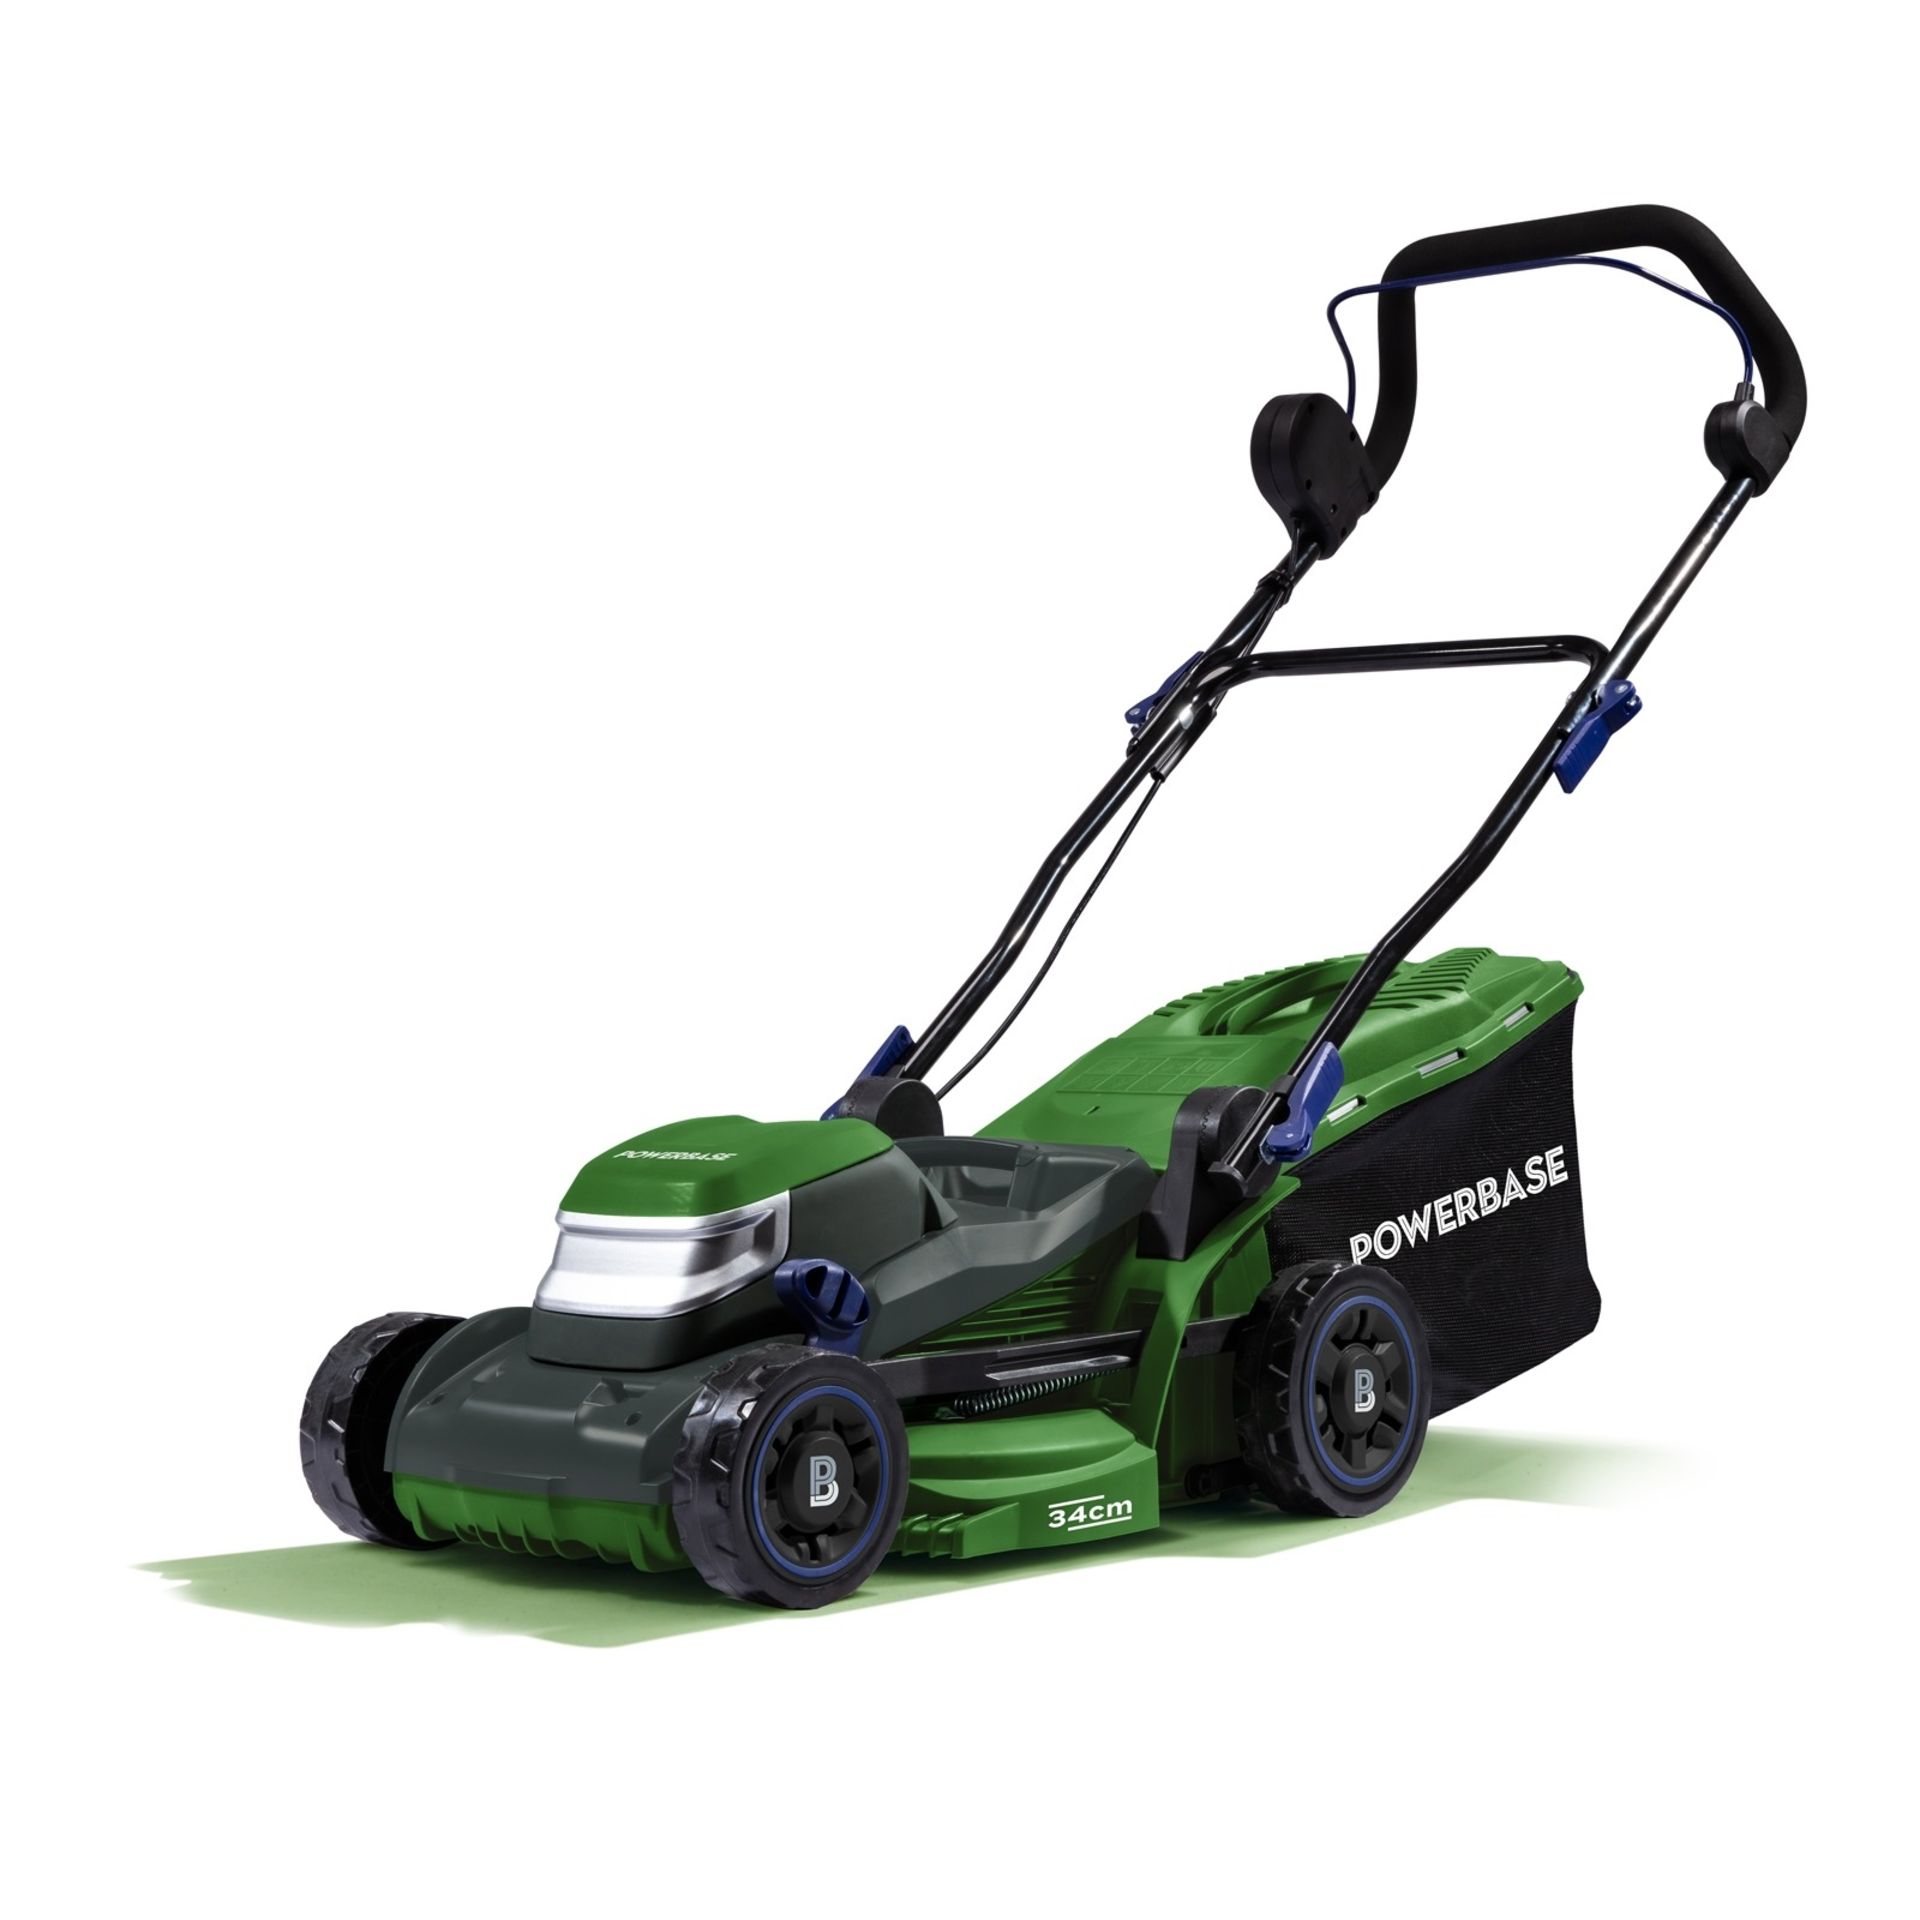 Powerbase 34cm 40V Cordless Lawn Mower - ER26